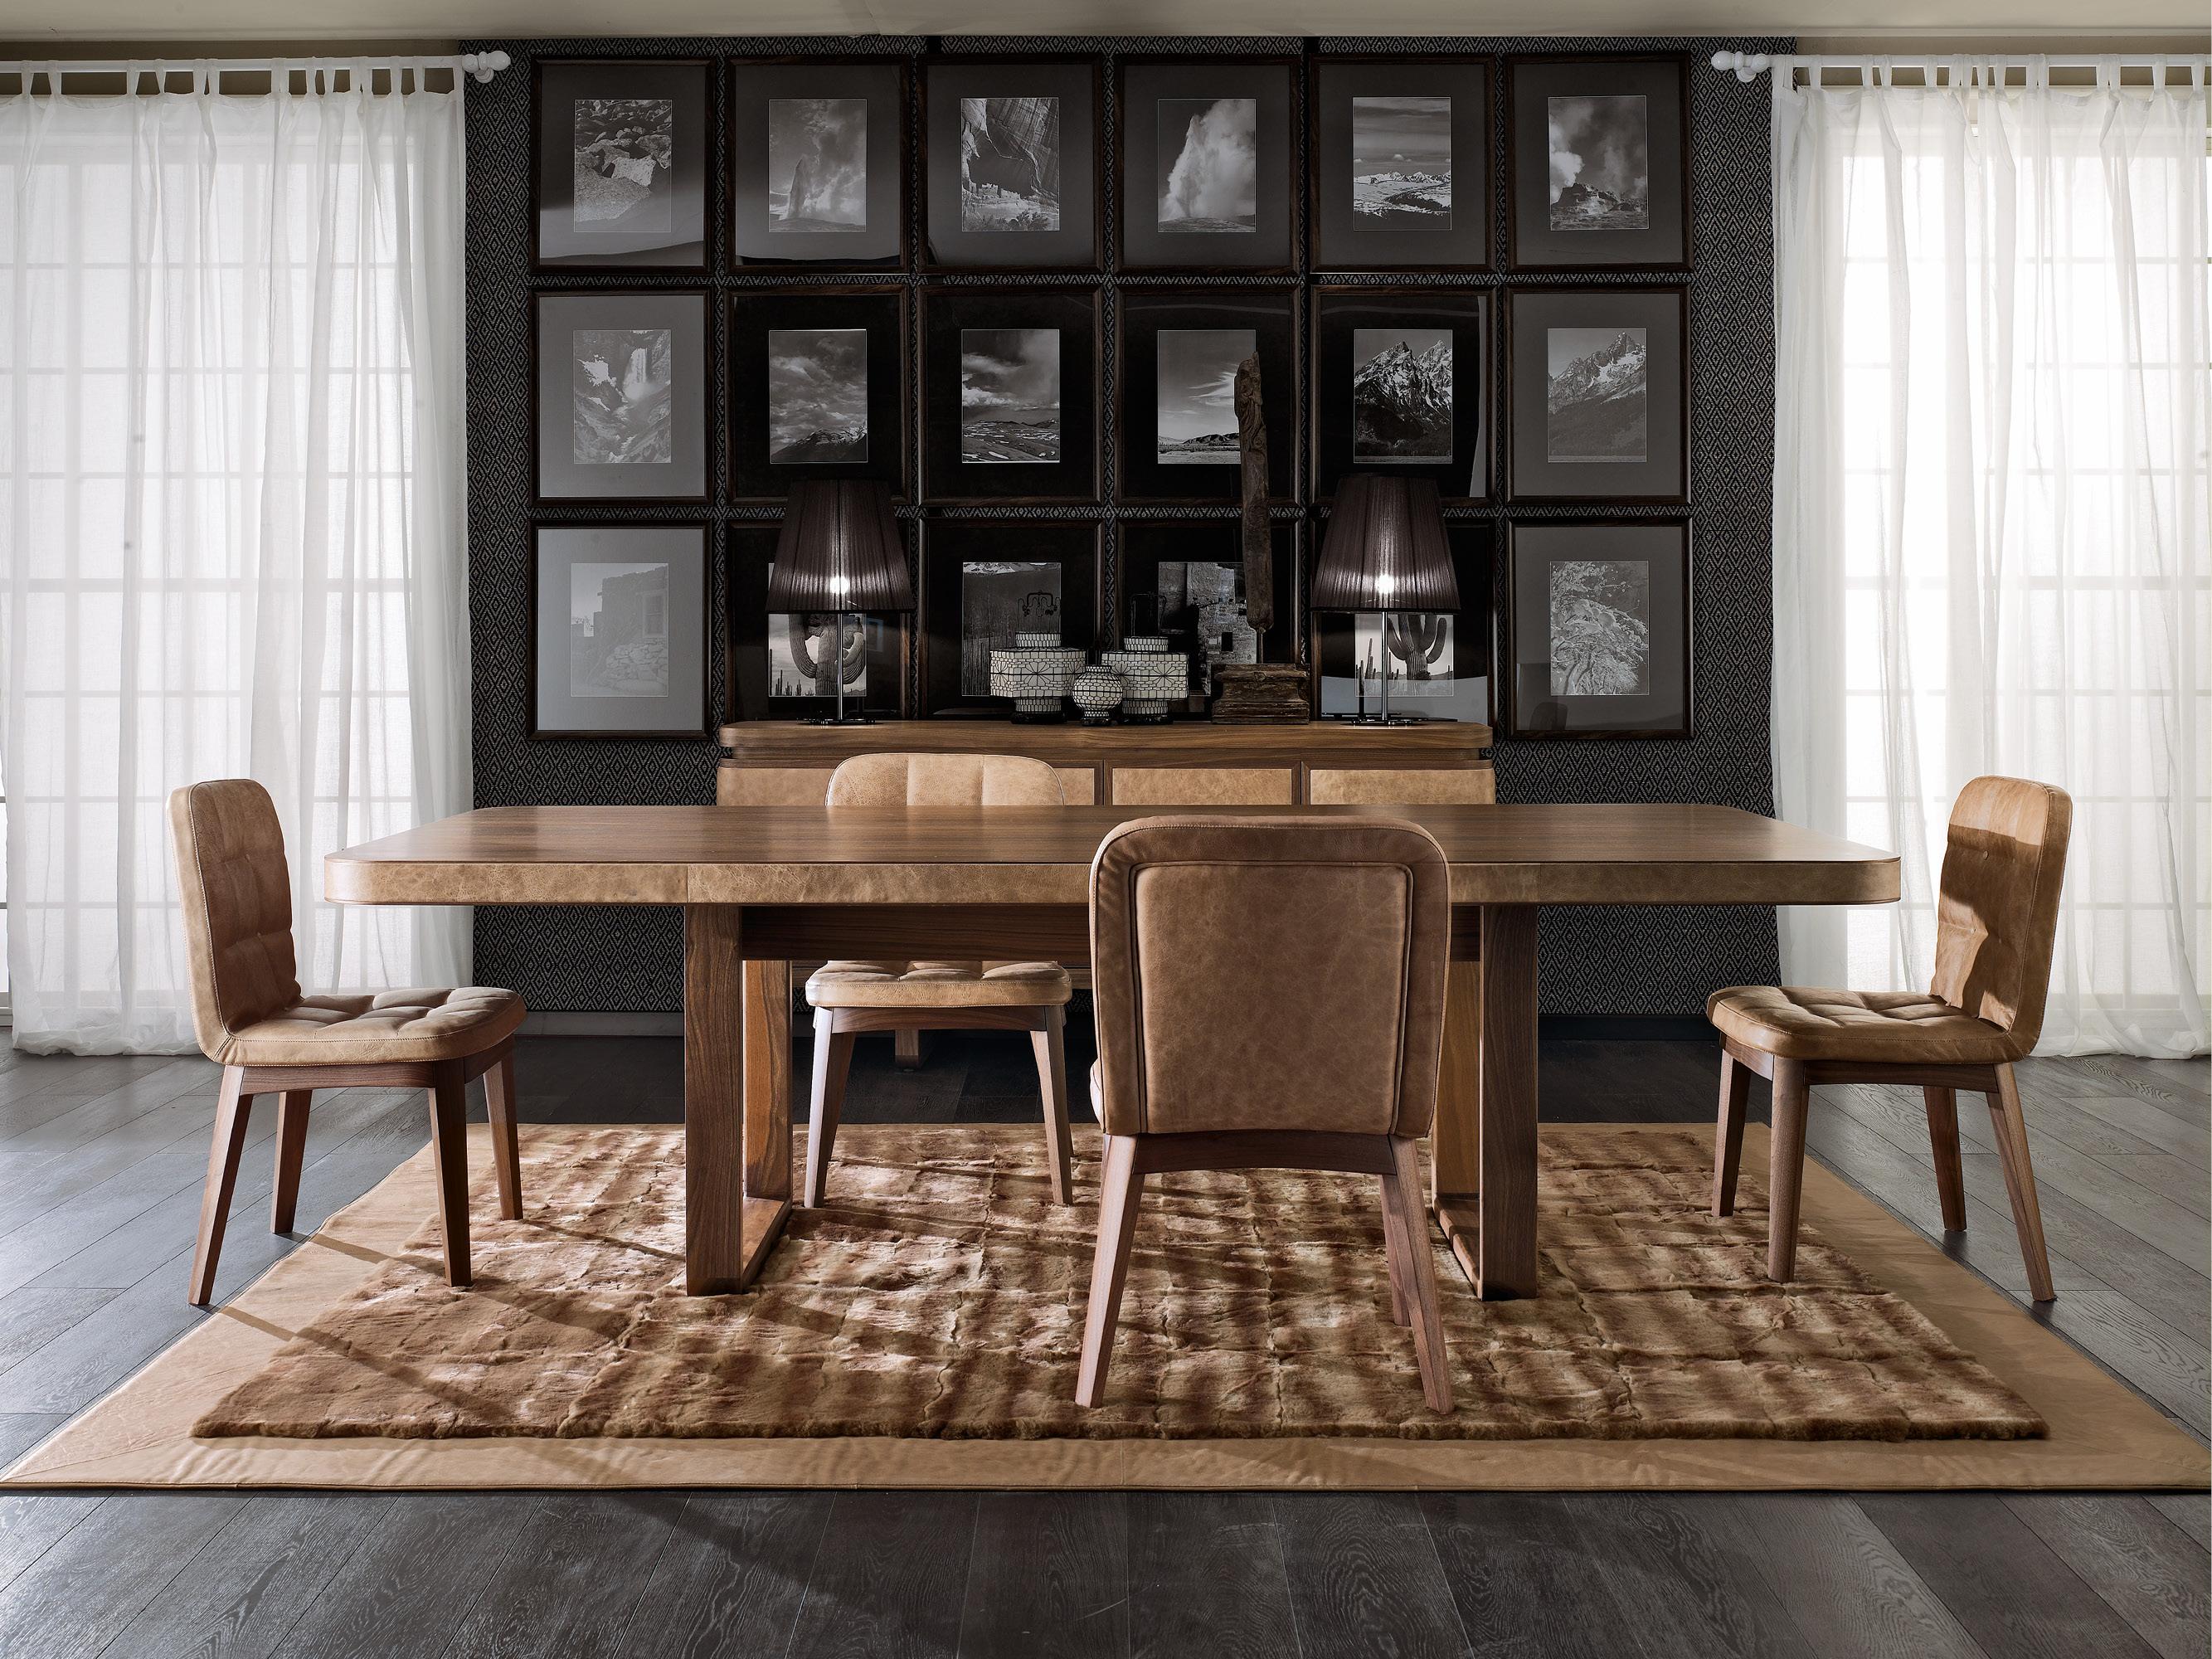 Modern Park Avenue table by Vegni Design For Sale